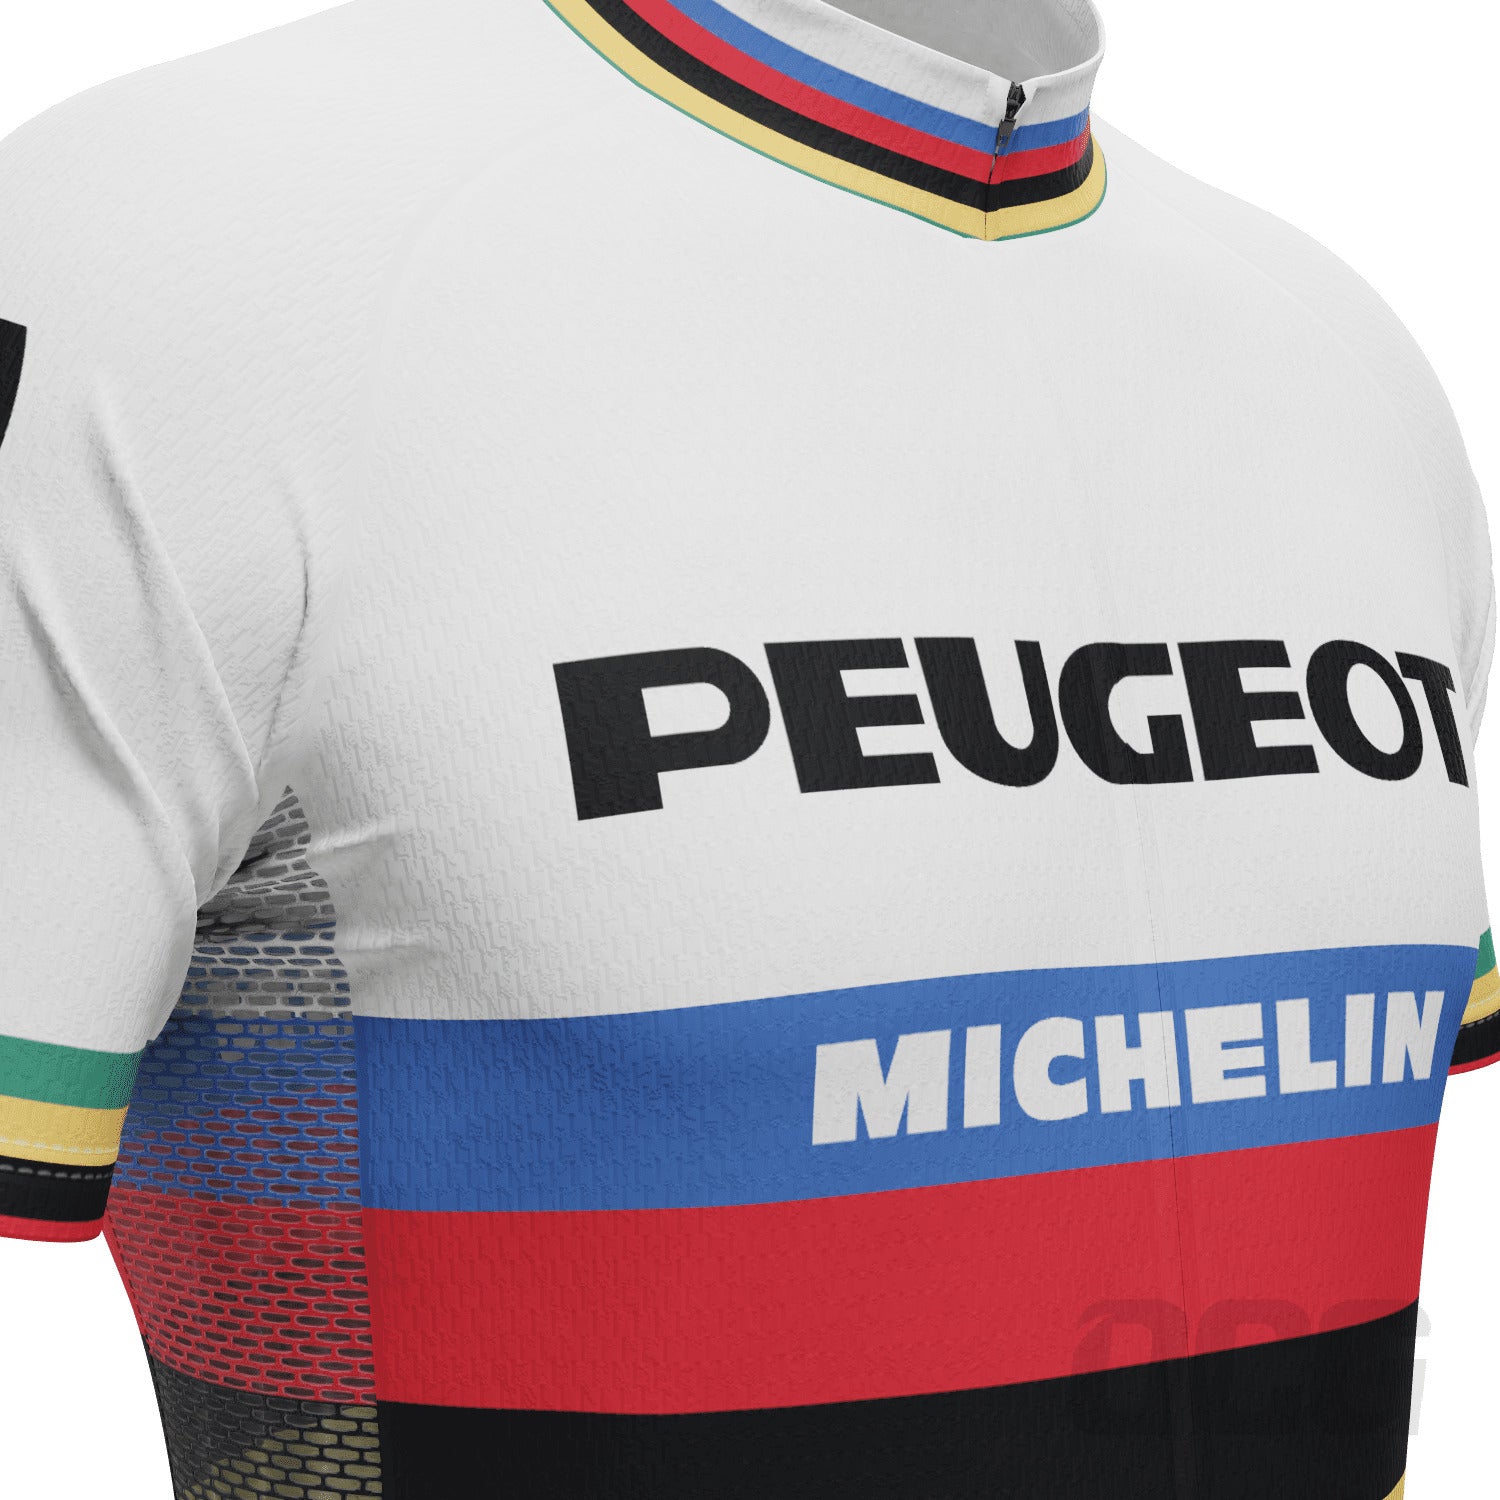 Men's Peugeot BP Michelin Retro Classic 2 Piece Cycling Kit